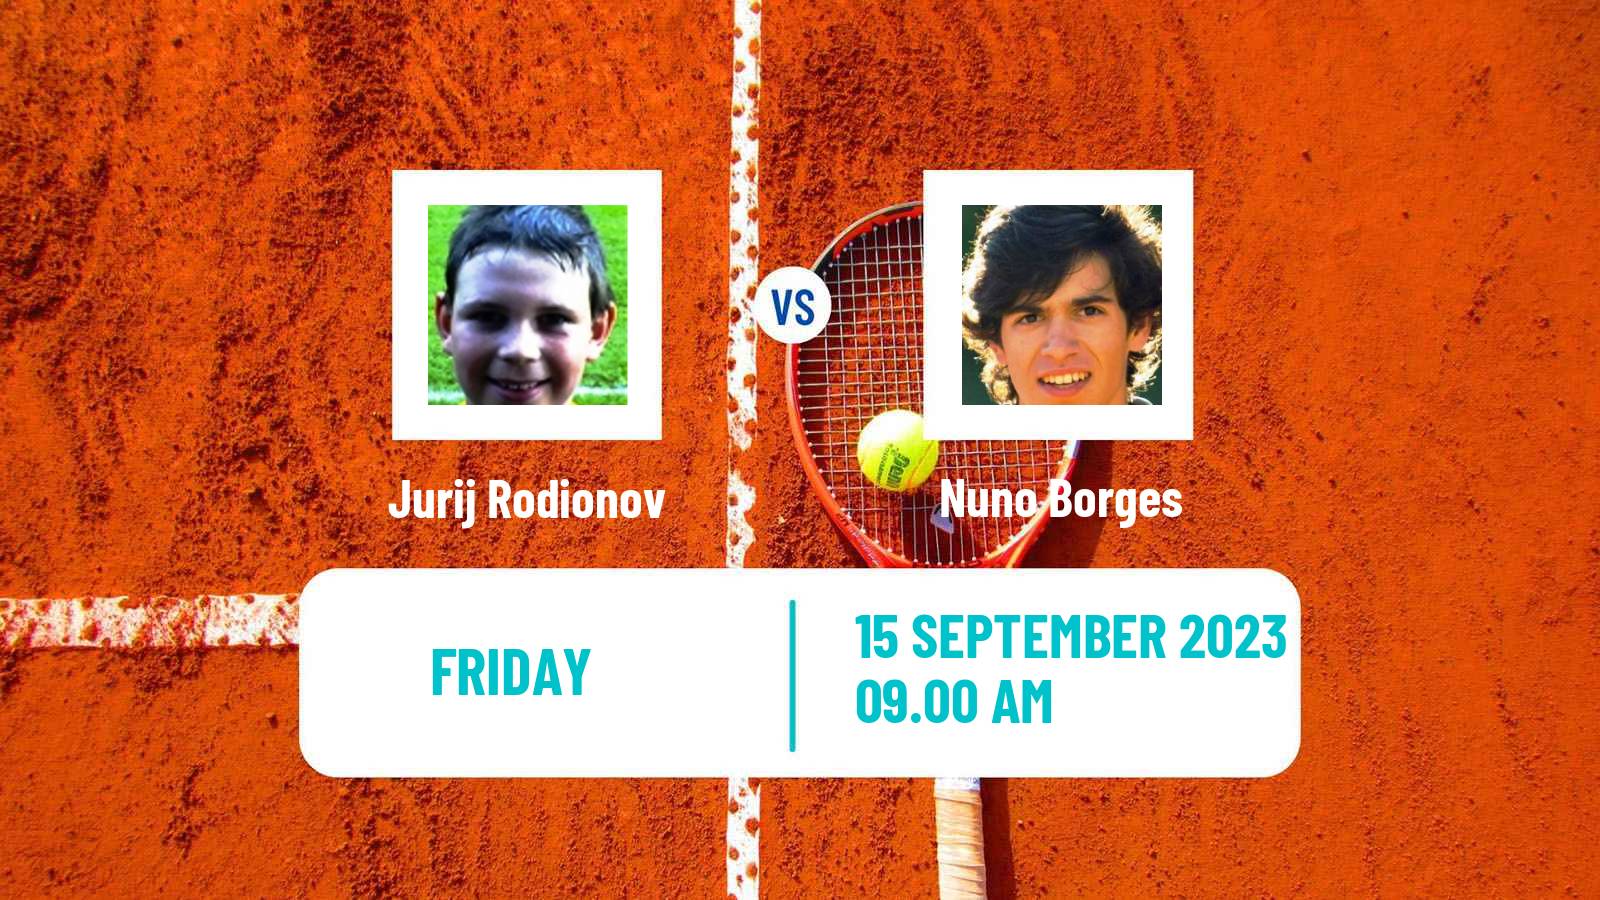 Tennis Davis Cup World Group I Jurij Rodionov - Nuno Borges